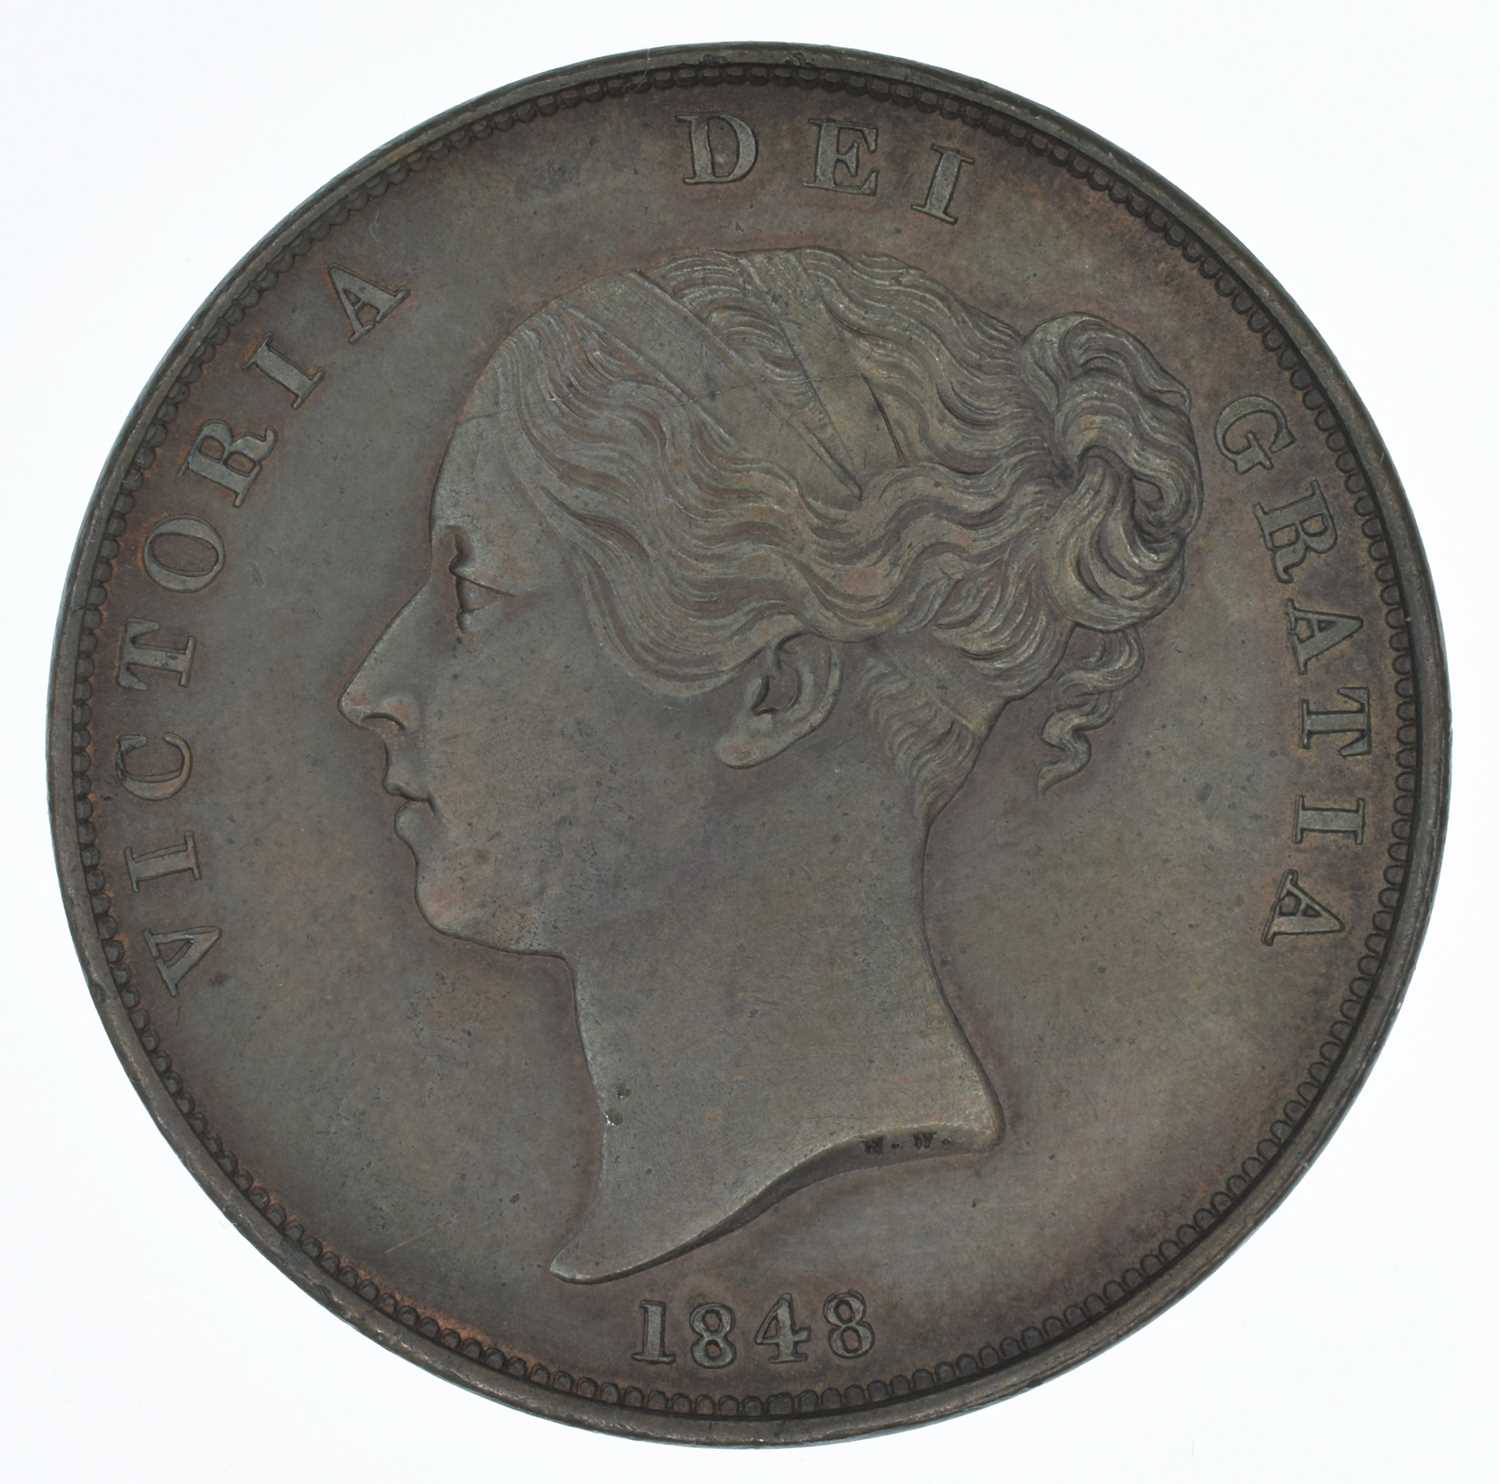 Queen Victoria, Penny, 1848, gEF.